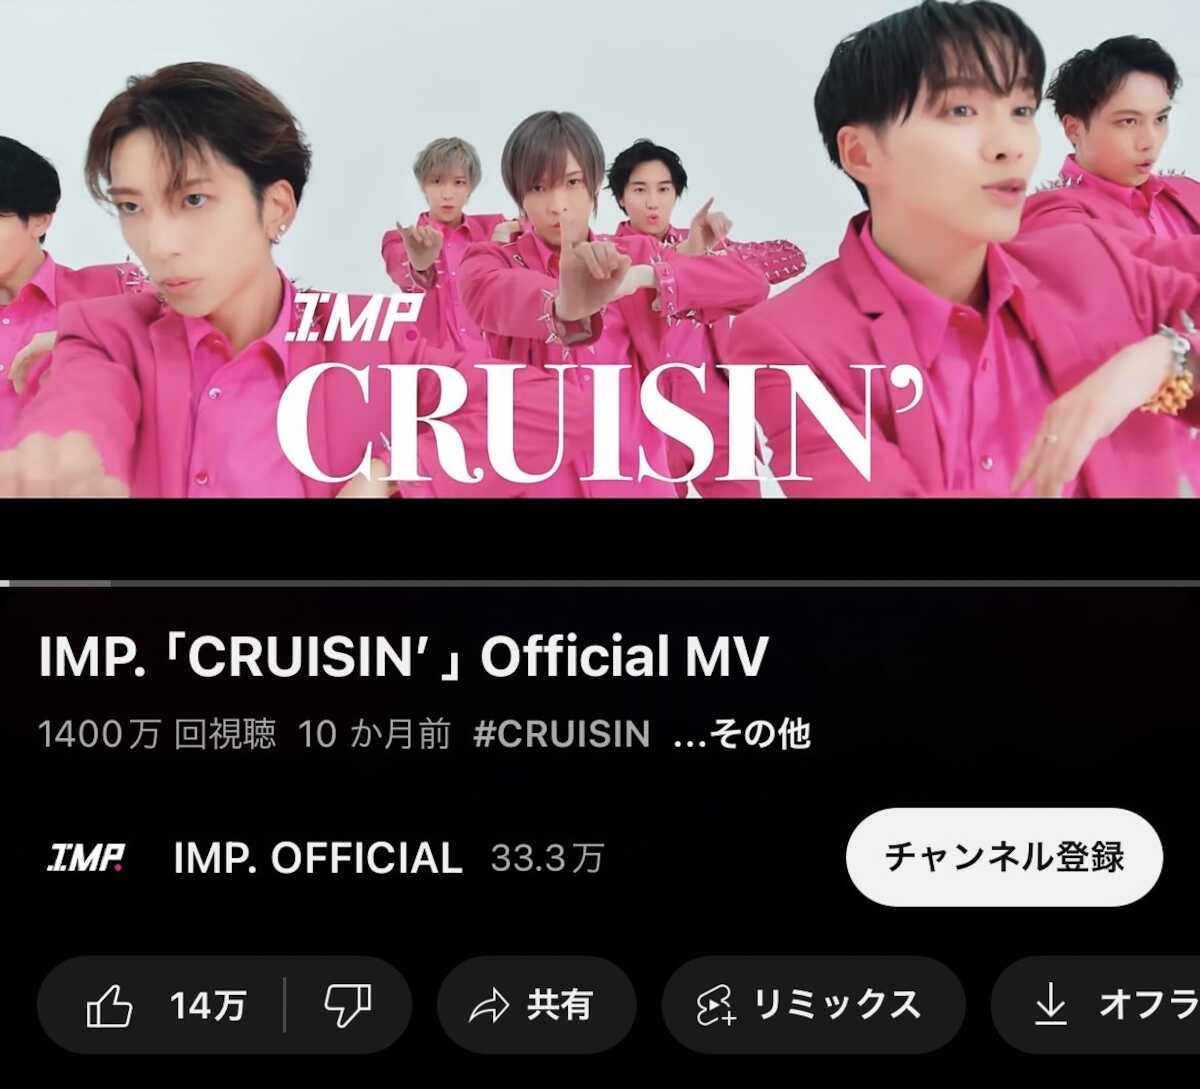 IMP. デジタルデビューシングル「CRUISIN’」のMV再生回数が1400万突破!